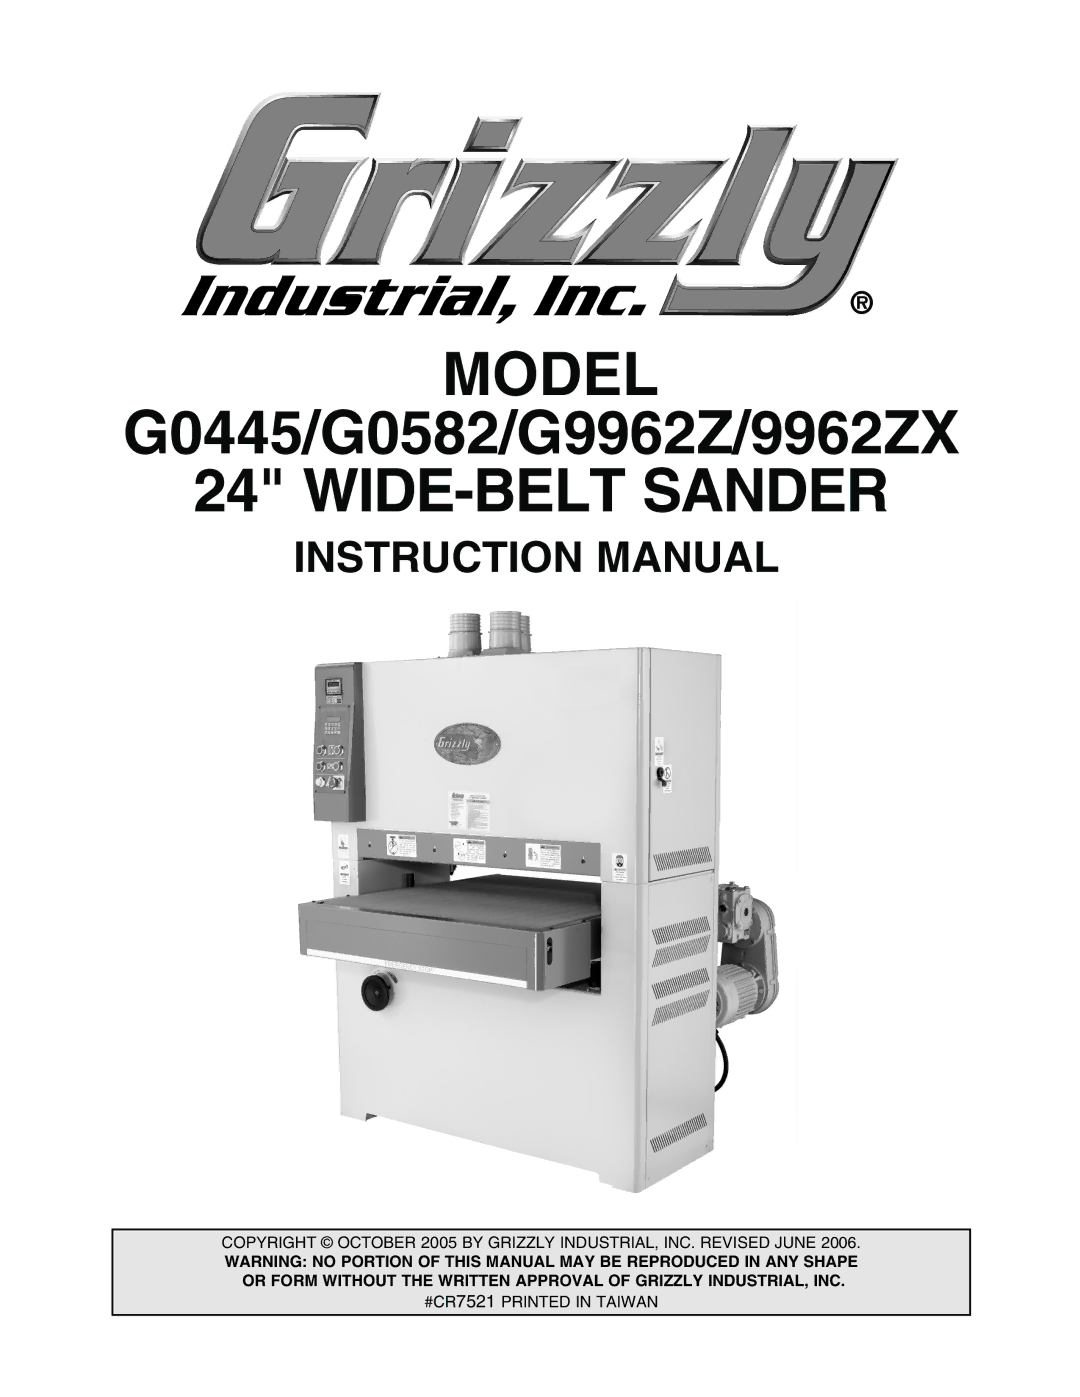 Grizzly G0582, G9962Z, 9962ZX, G0445 instruction manual Model 